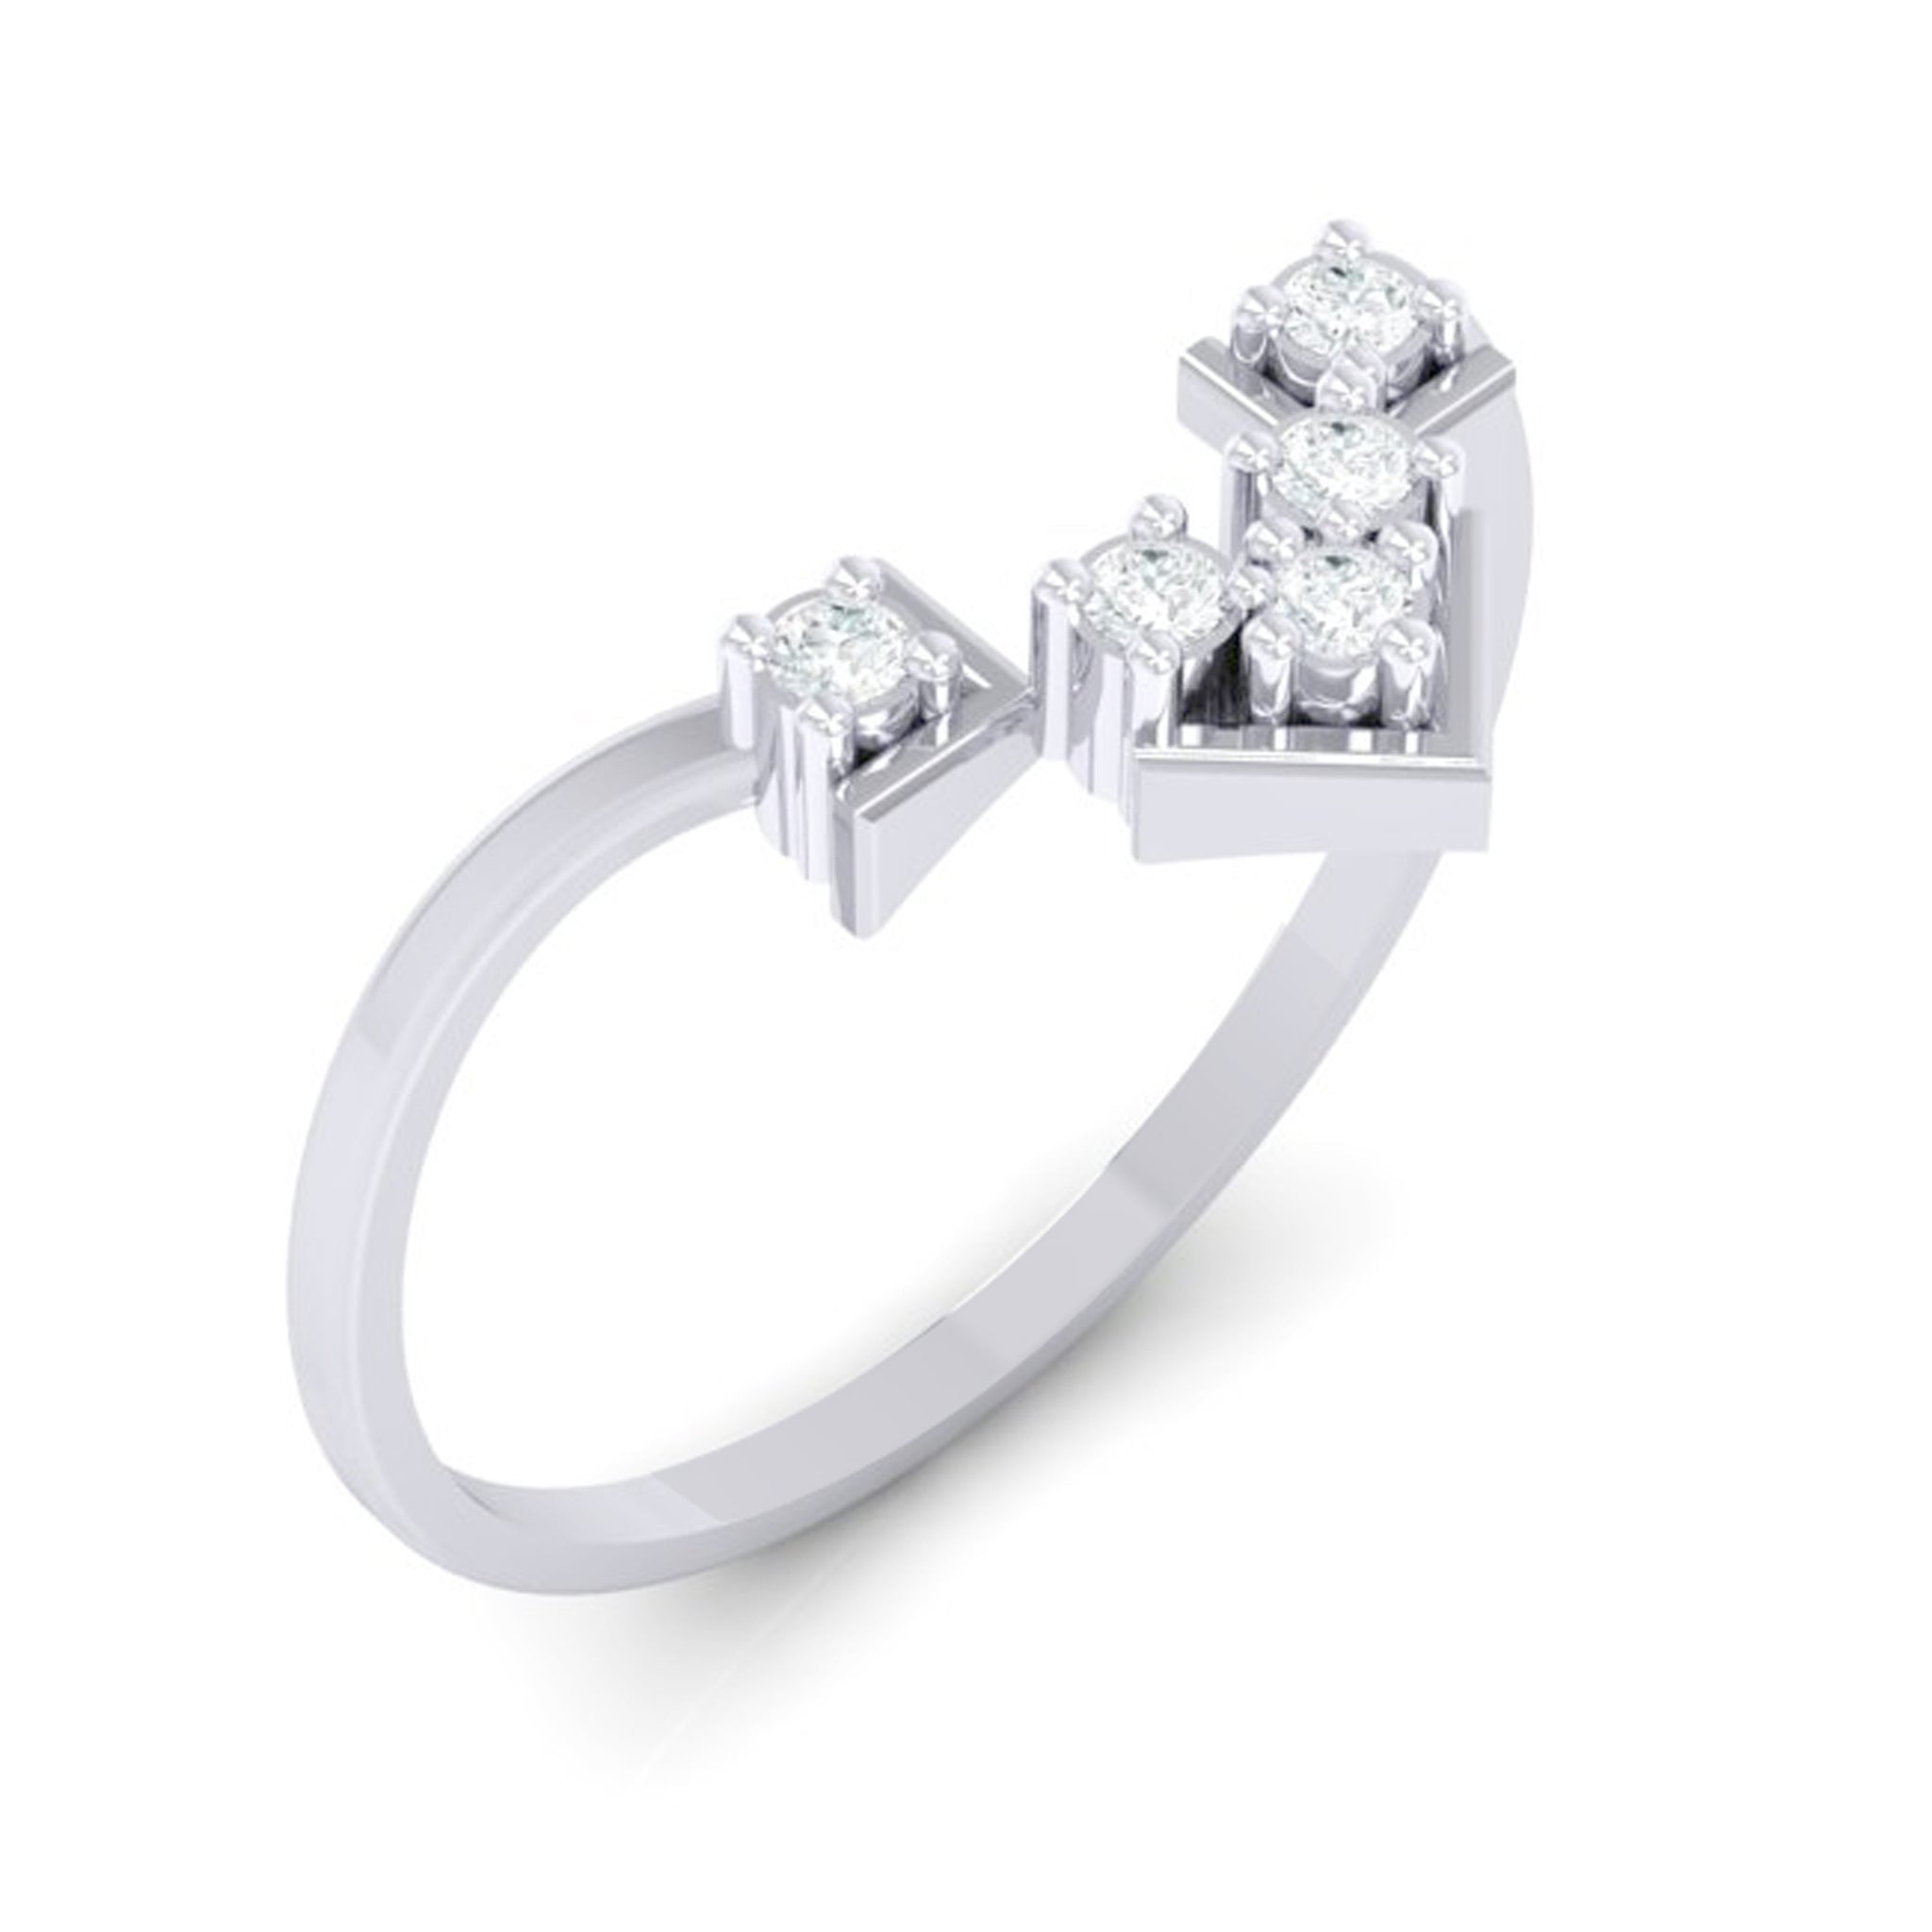 Buy Original Diamond Silver Plated Ring Lab Certified Precious Stone Diamond  Ring By CEYLONMINE Online - Get 54% Off